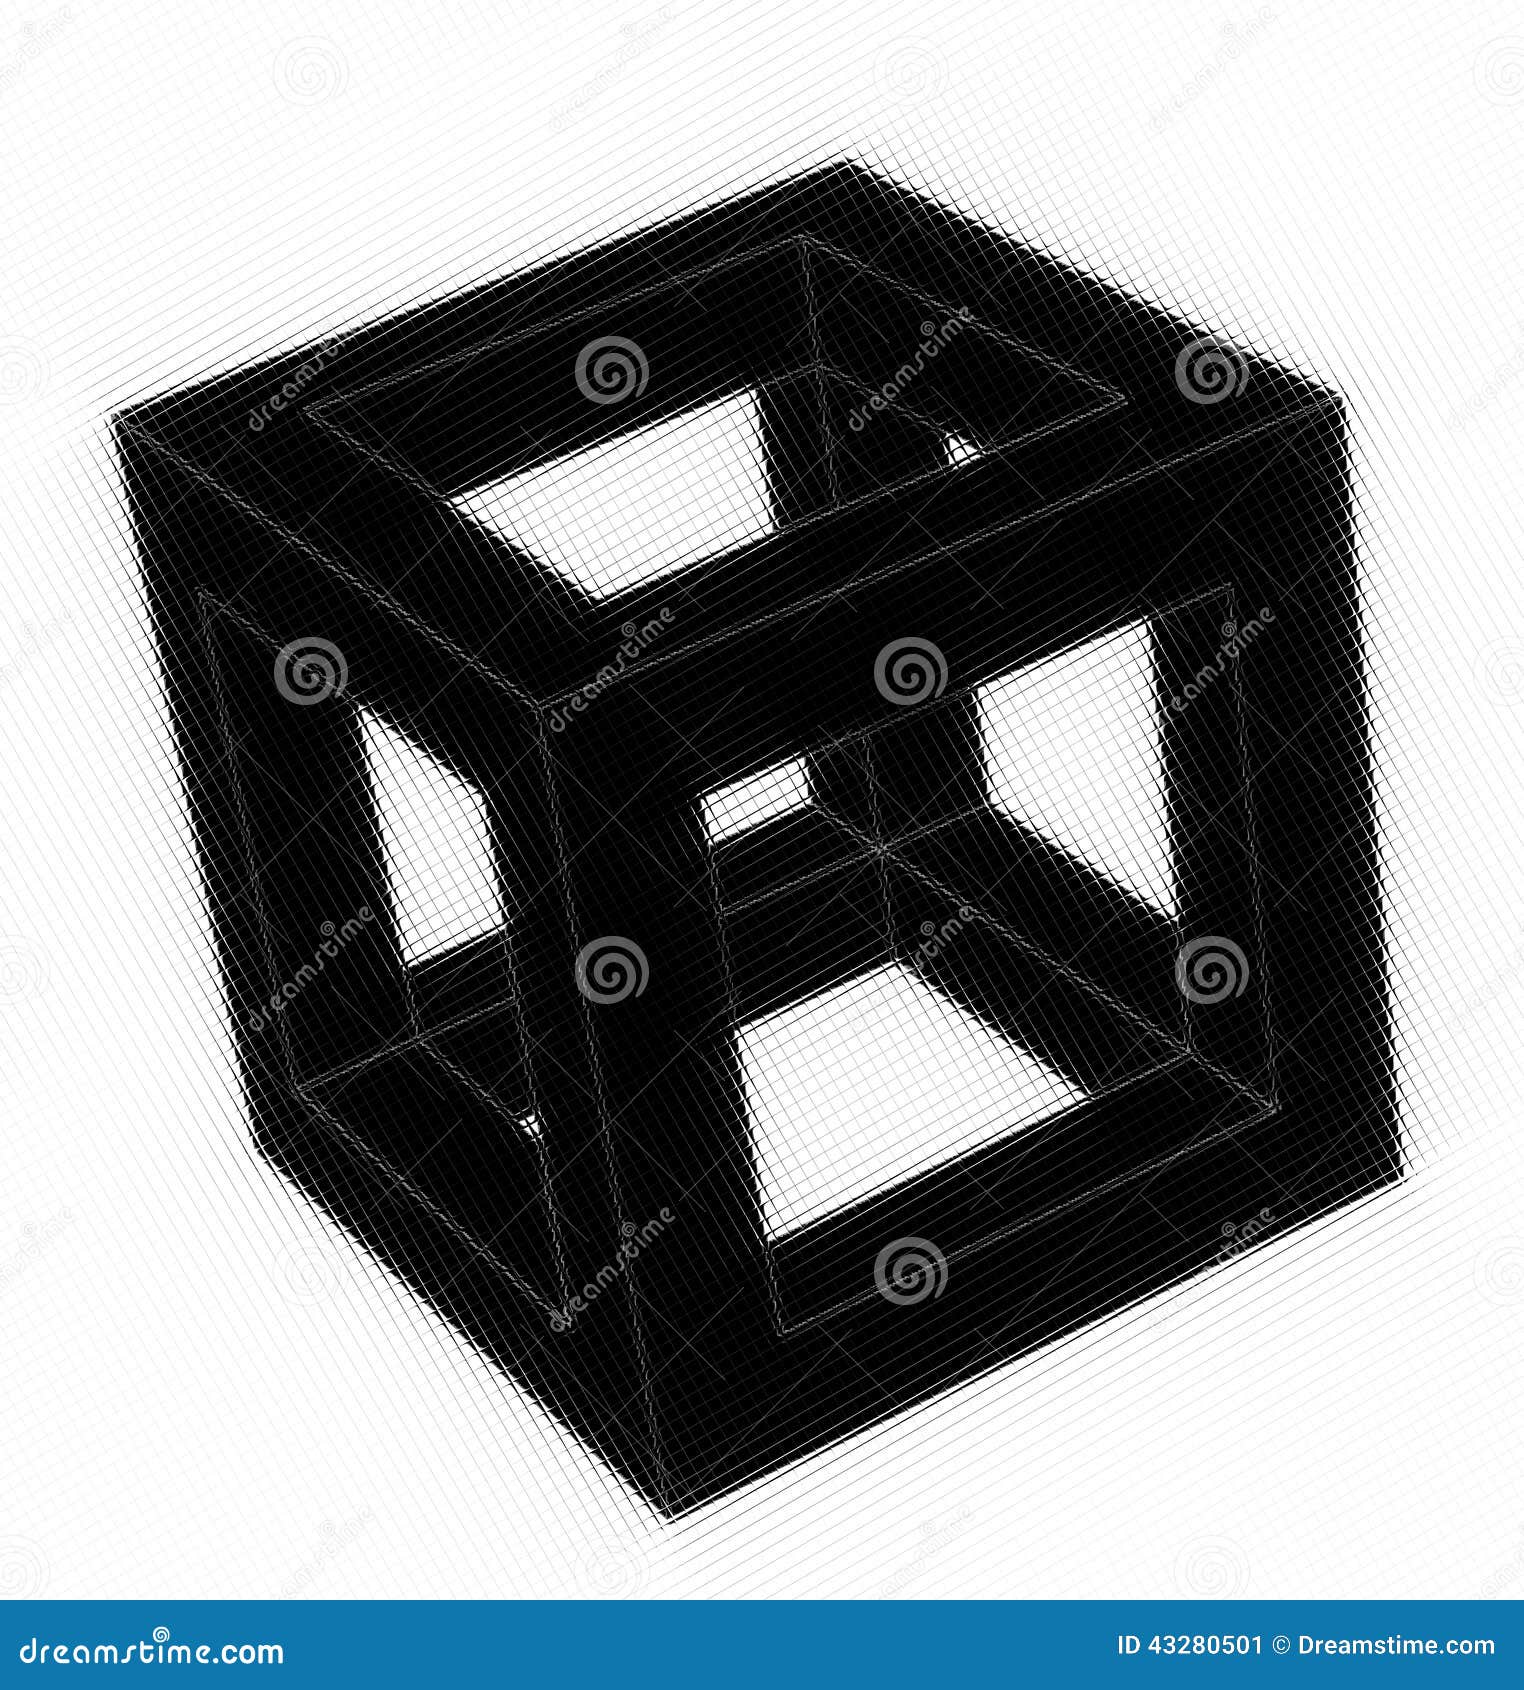 Black Cube Stock Illustration - Image: 43280501